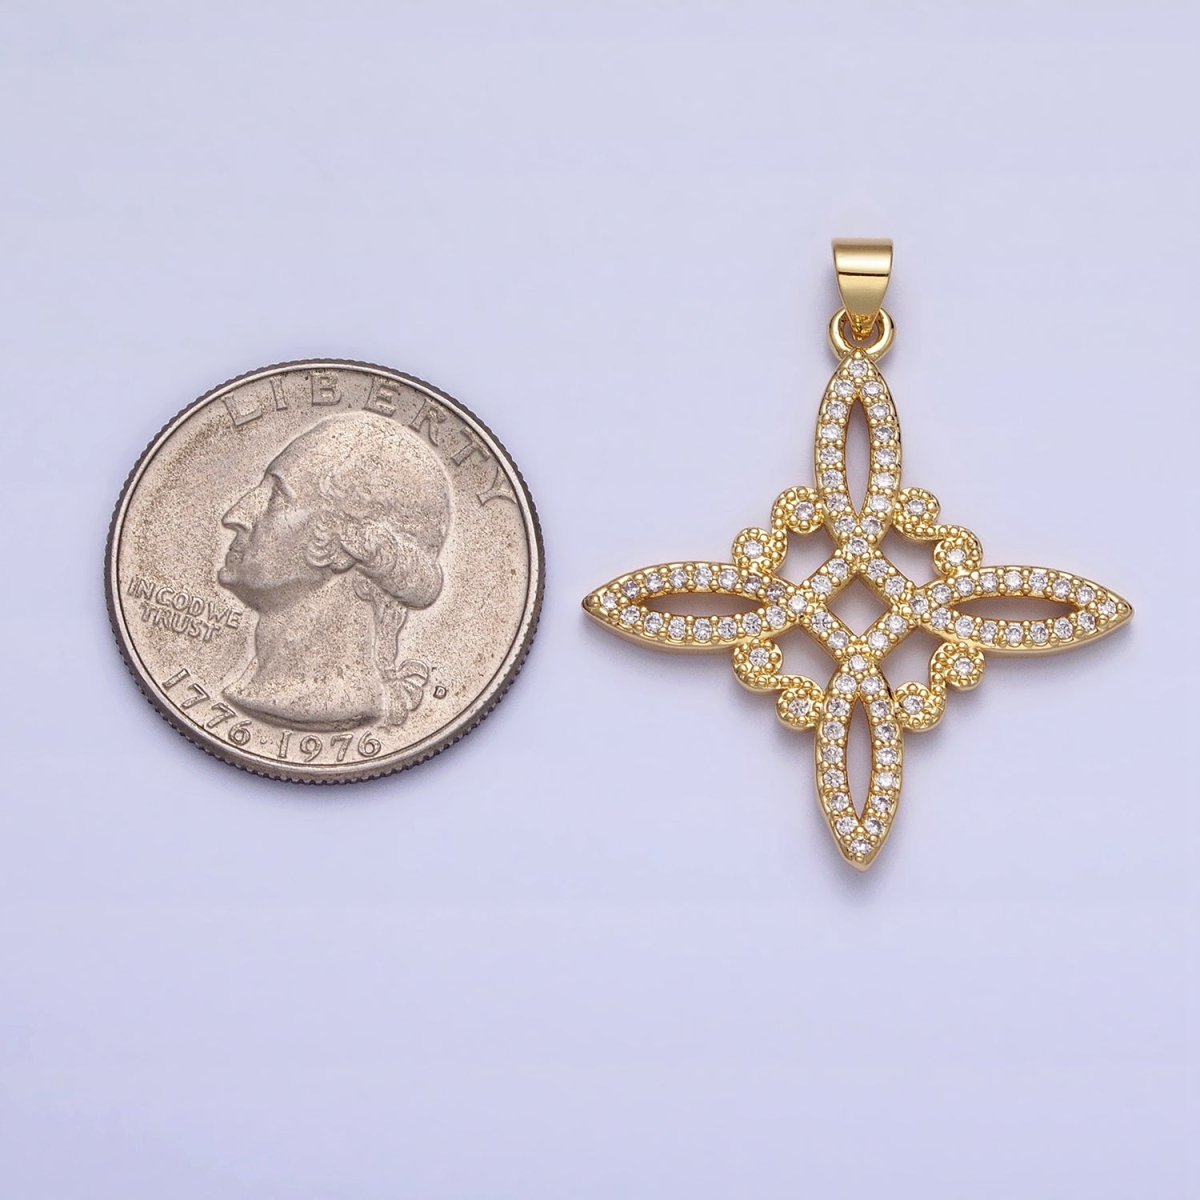 Micro Pave Celtic Knot Gold CZ Eternity Knot Circle Pendant Charm Statement Jewelry Luxury Elegant AA145 - DLUXCA